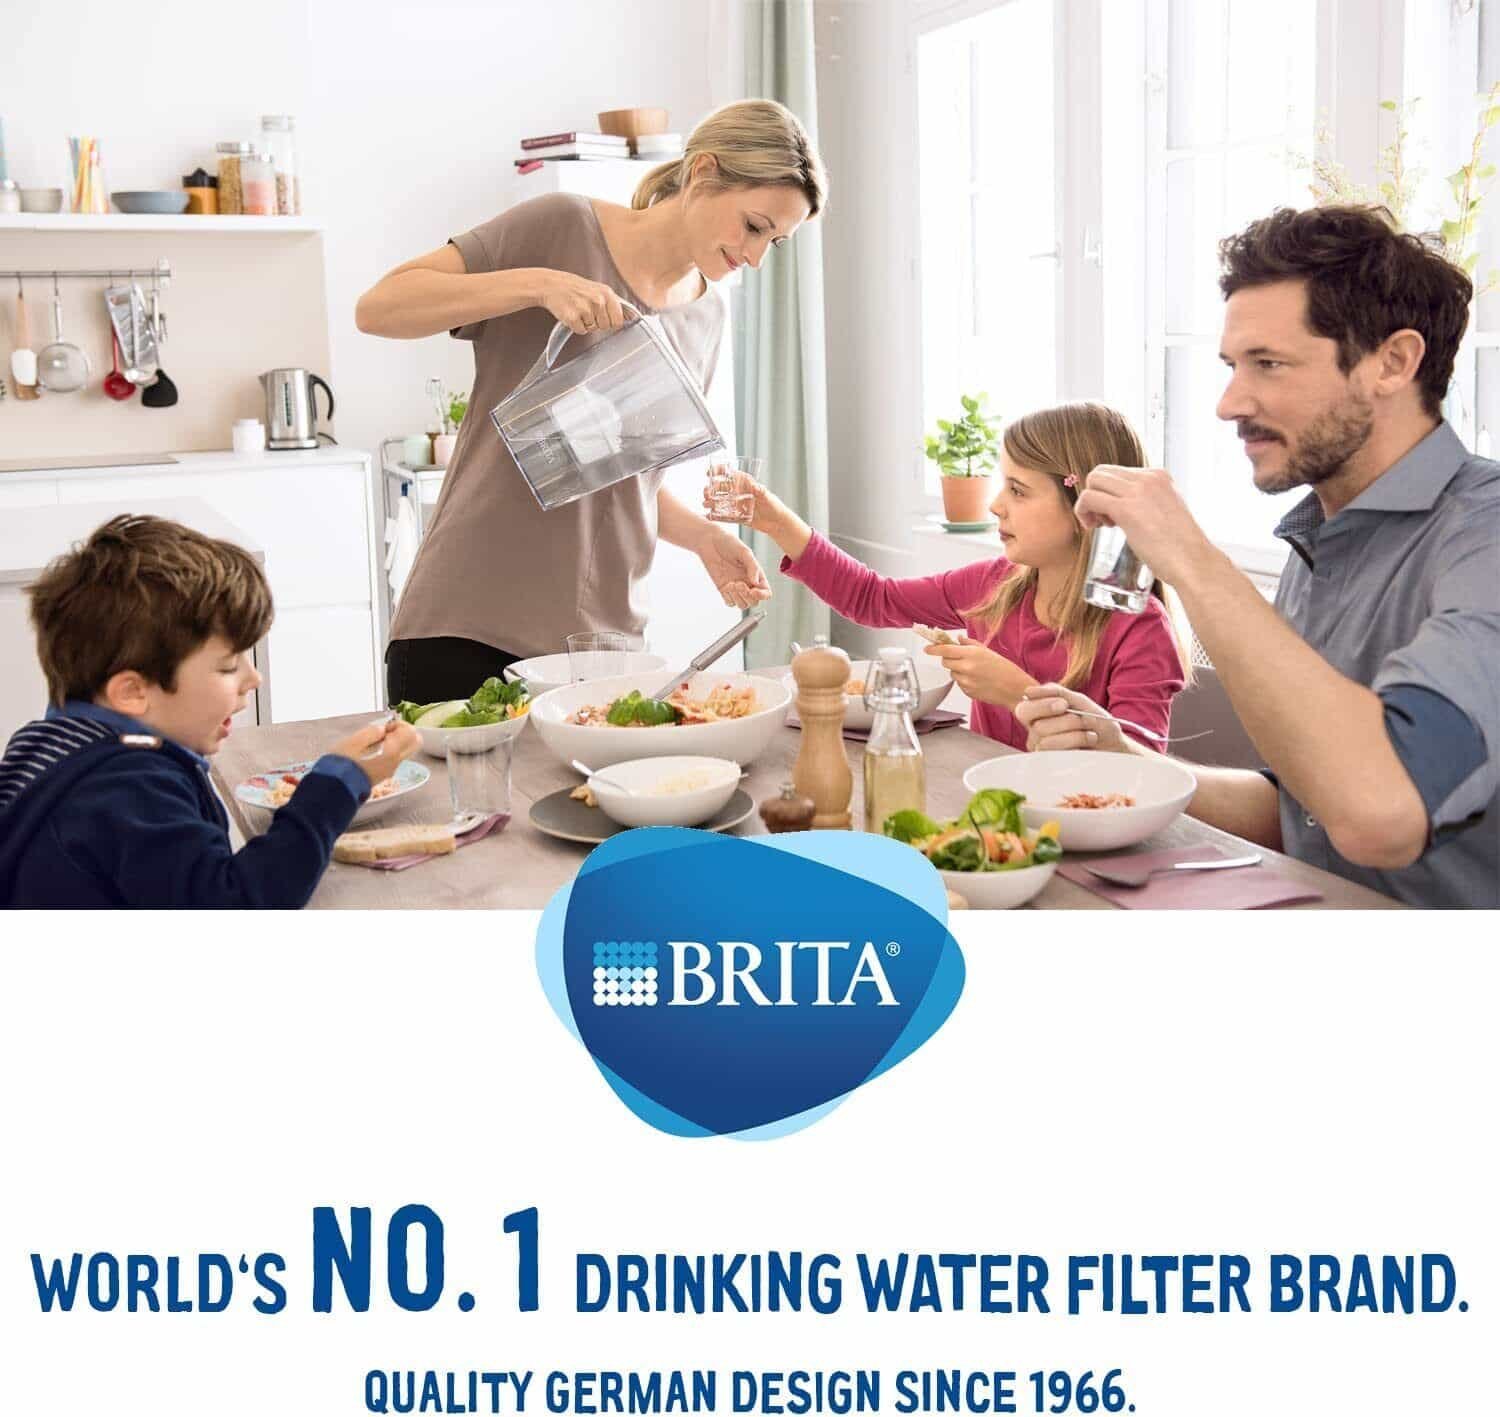 BRITA Maxtra PRO Pure Performance filter